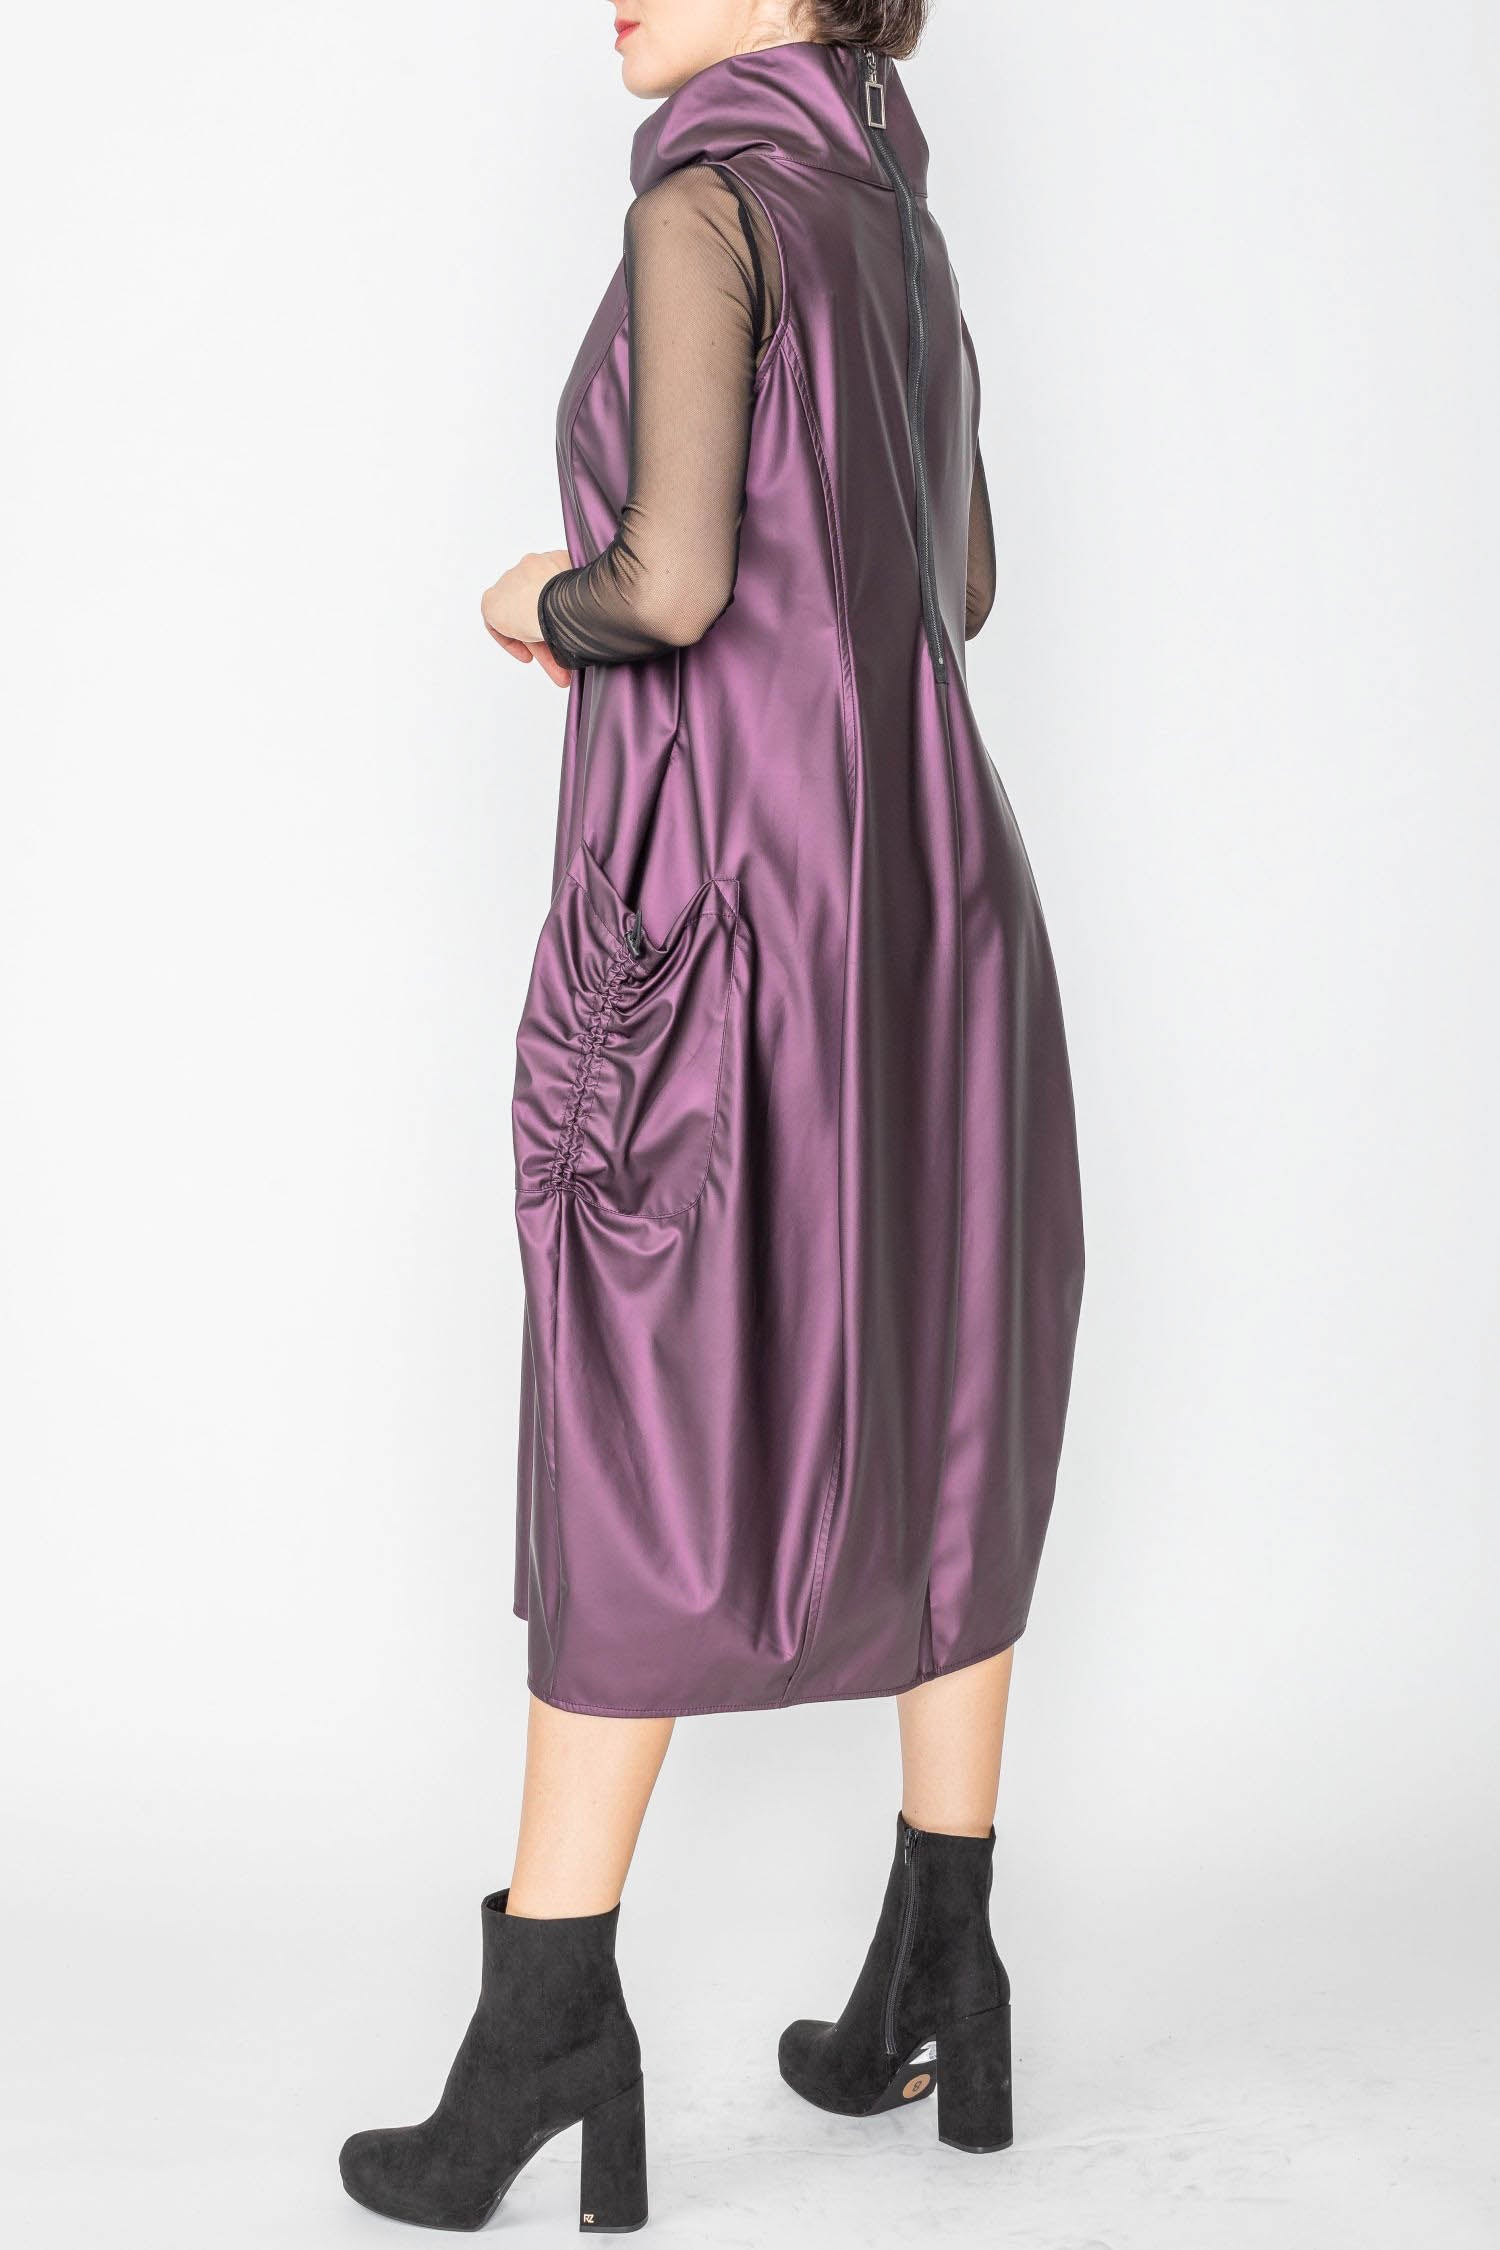 Violet Side Design Pocket Sleeveless Balloon Dress